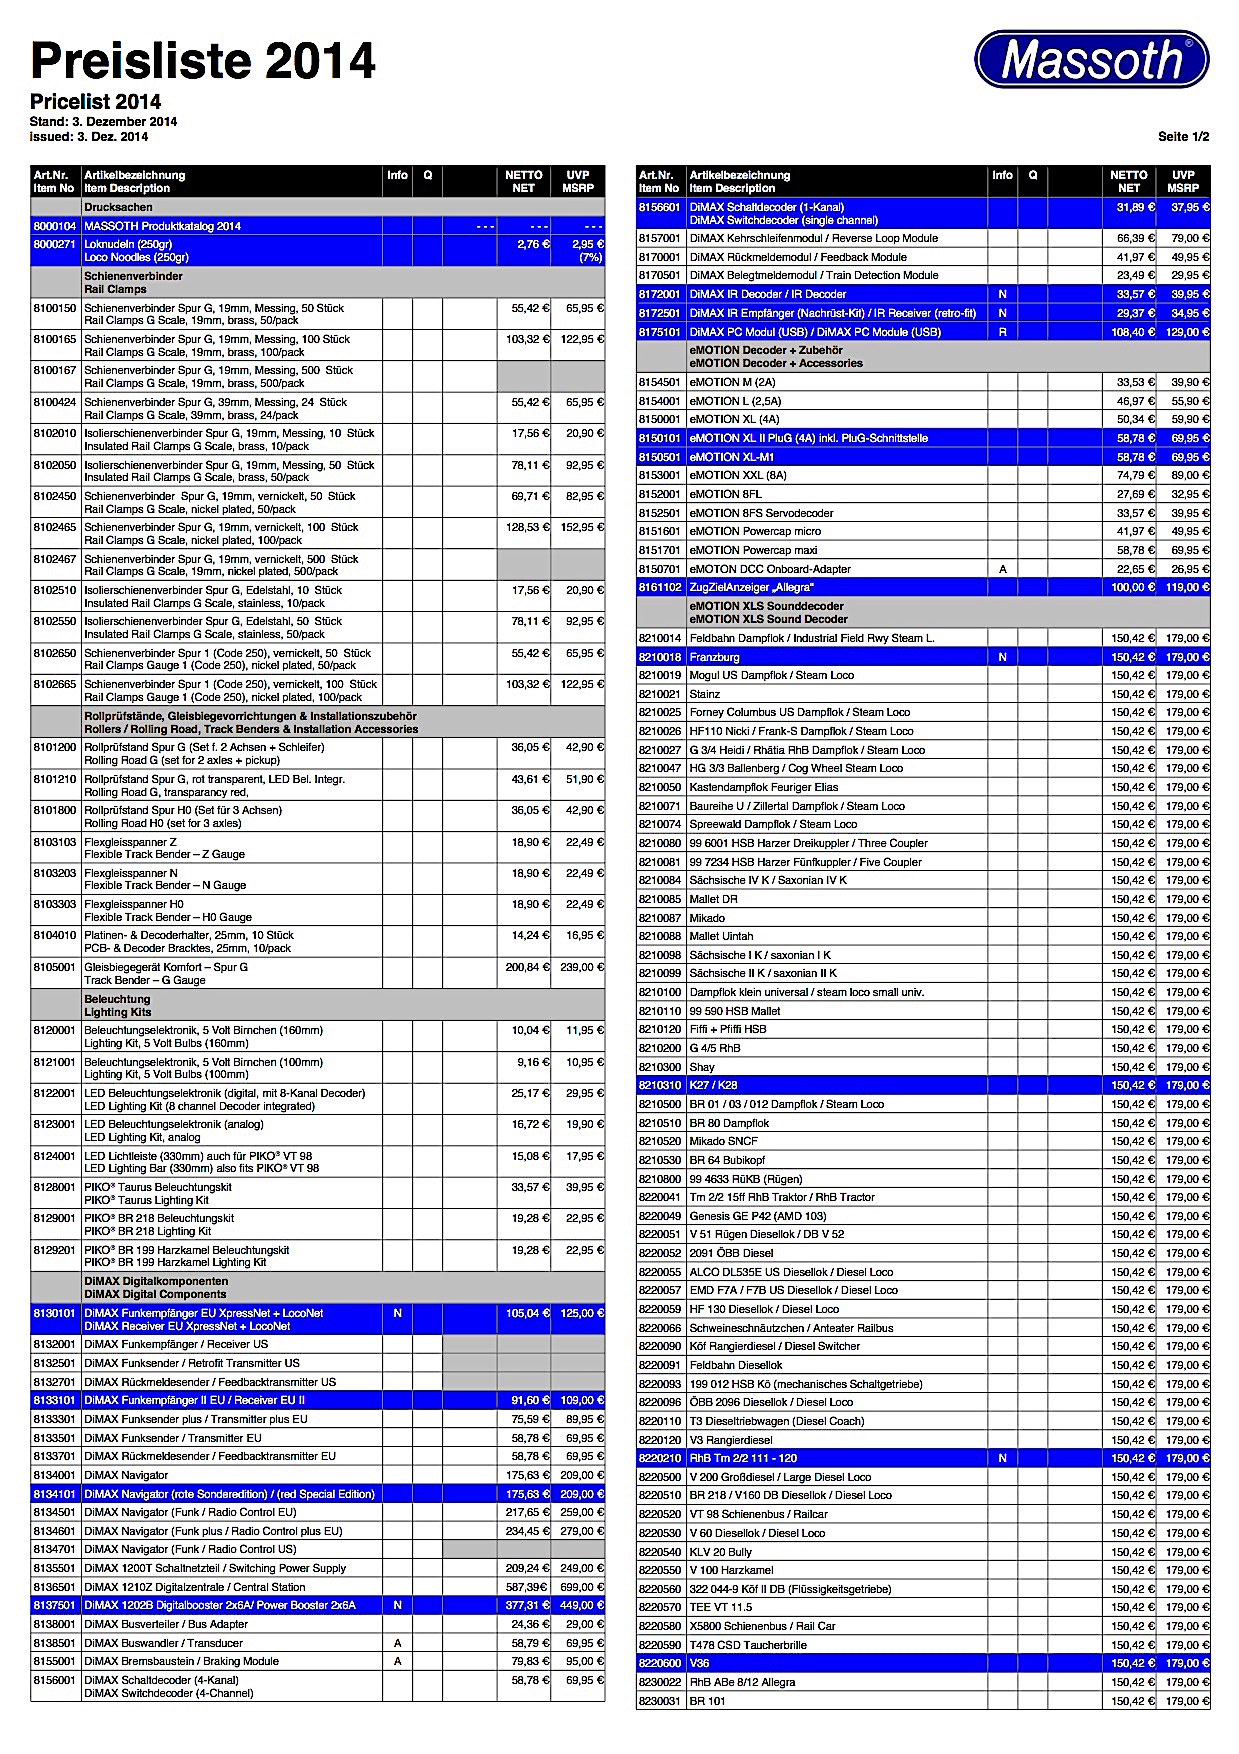 Massoth Preisliste (Price list) 2014